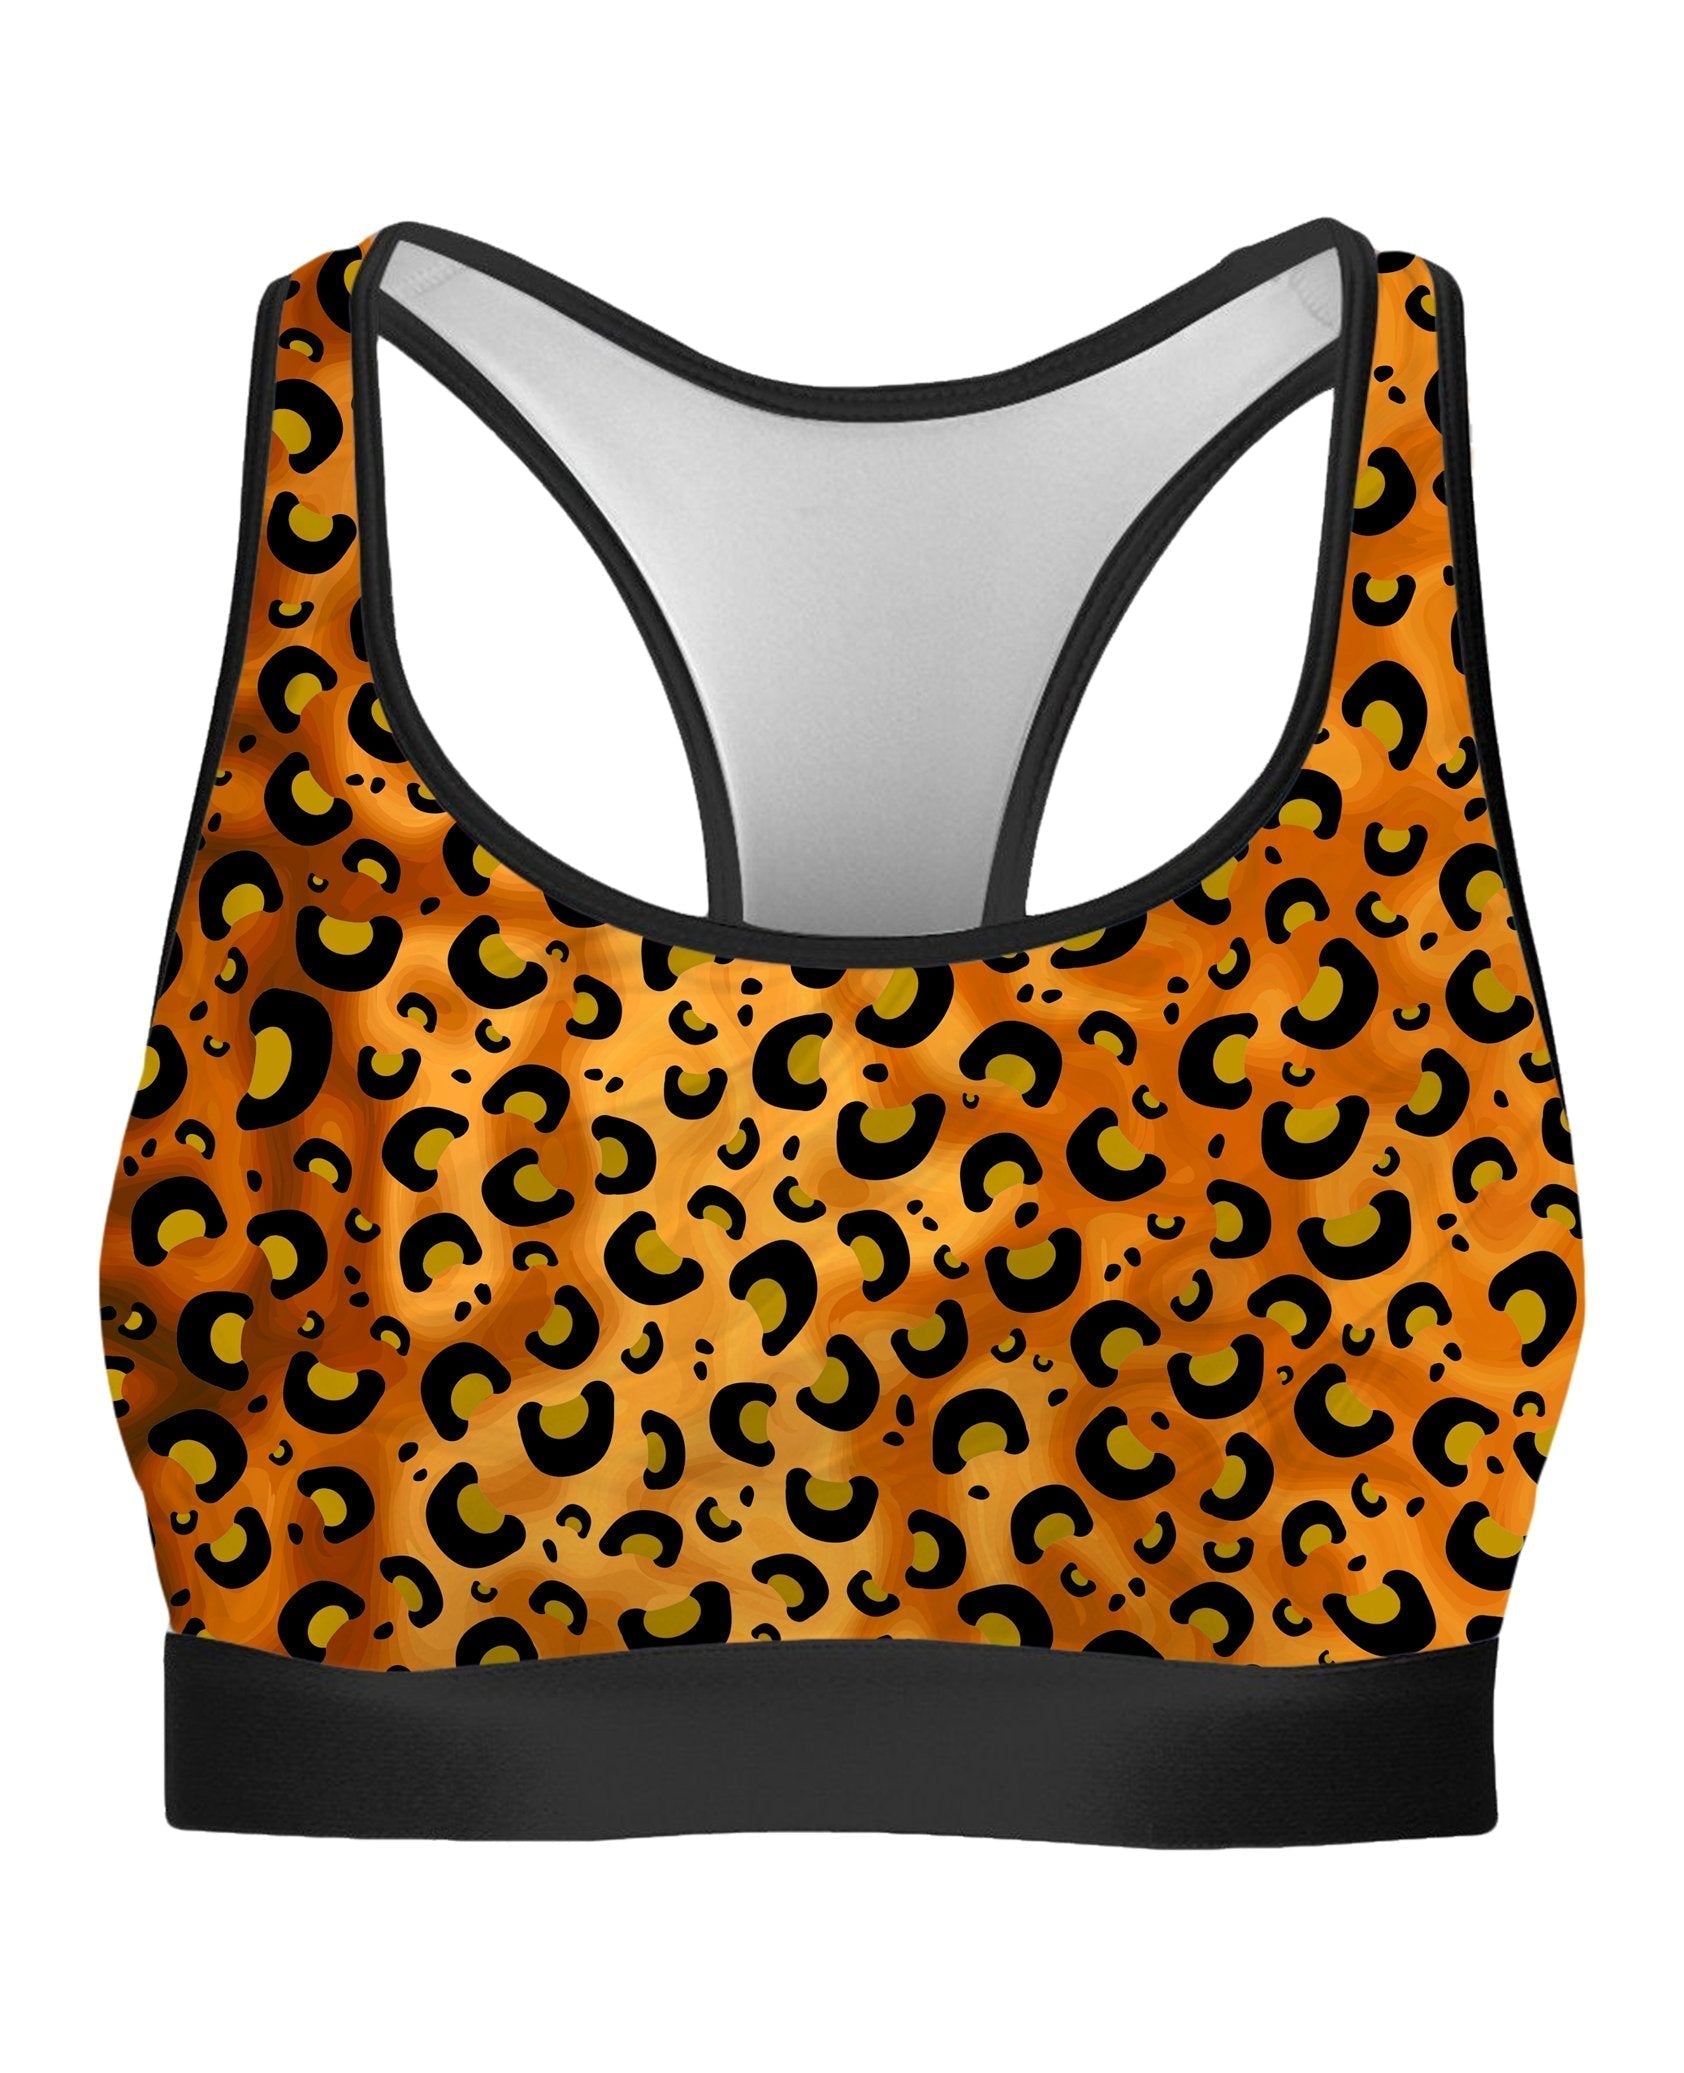 Cheetah Print Rave Bra - 3D All over print